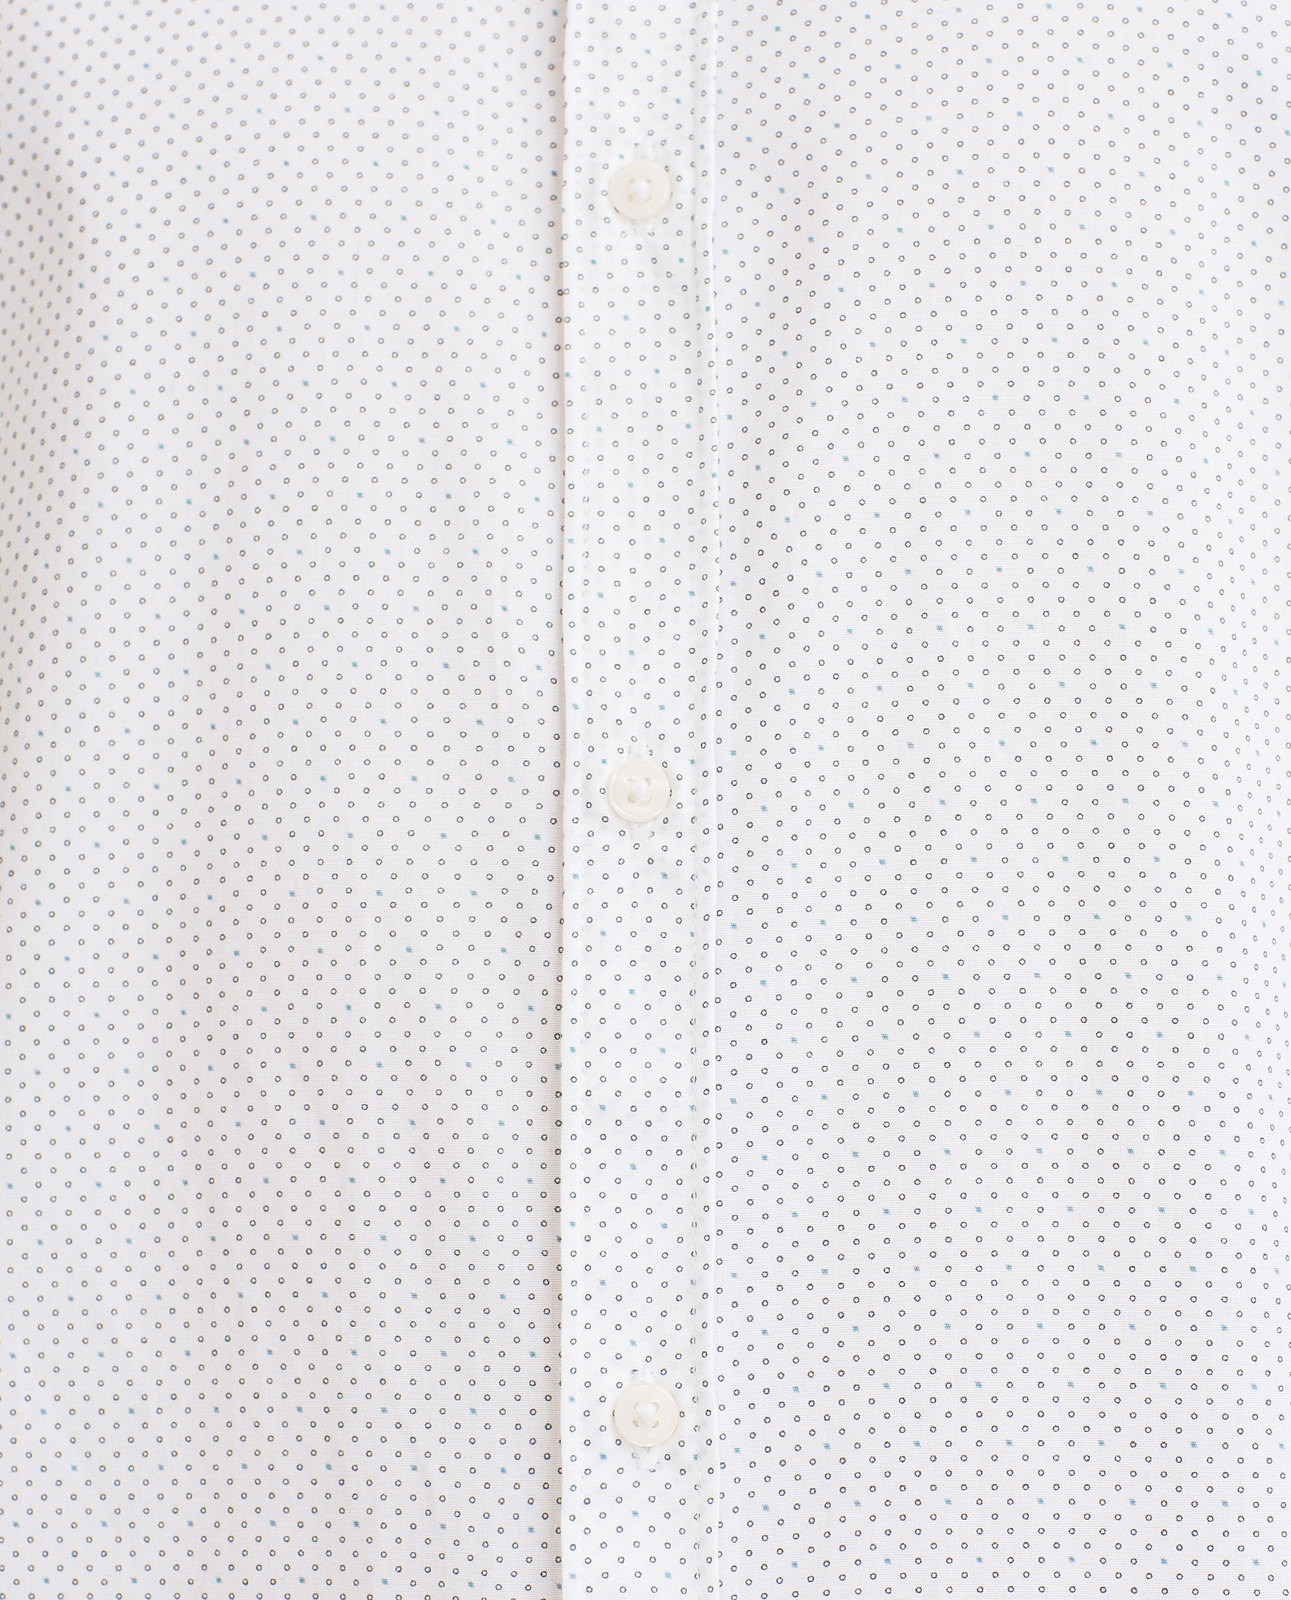 Zara apró pöttyös fehér férfi ing 2015.10.15 #88982 fotója